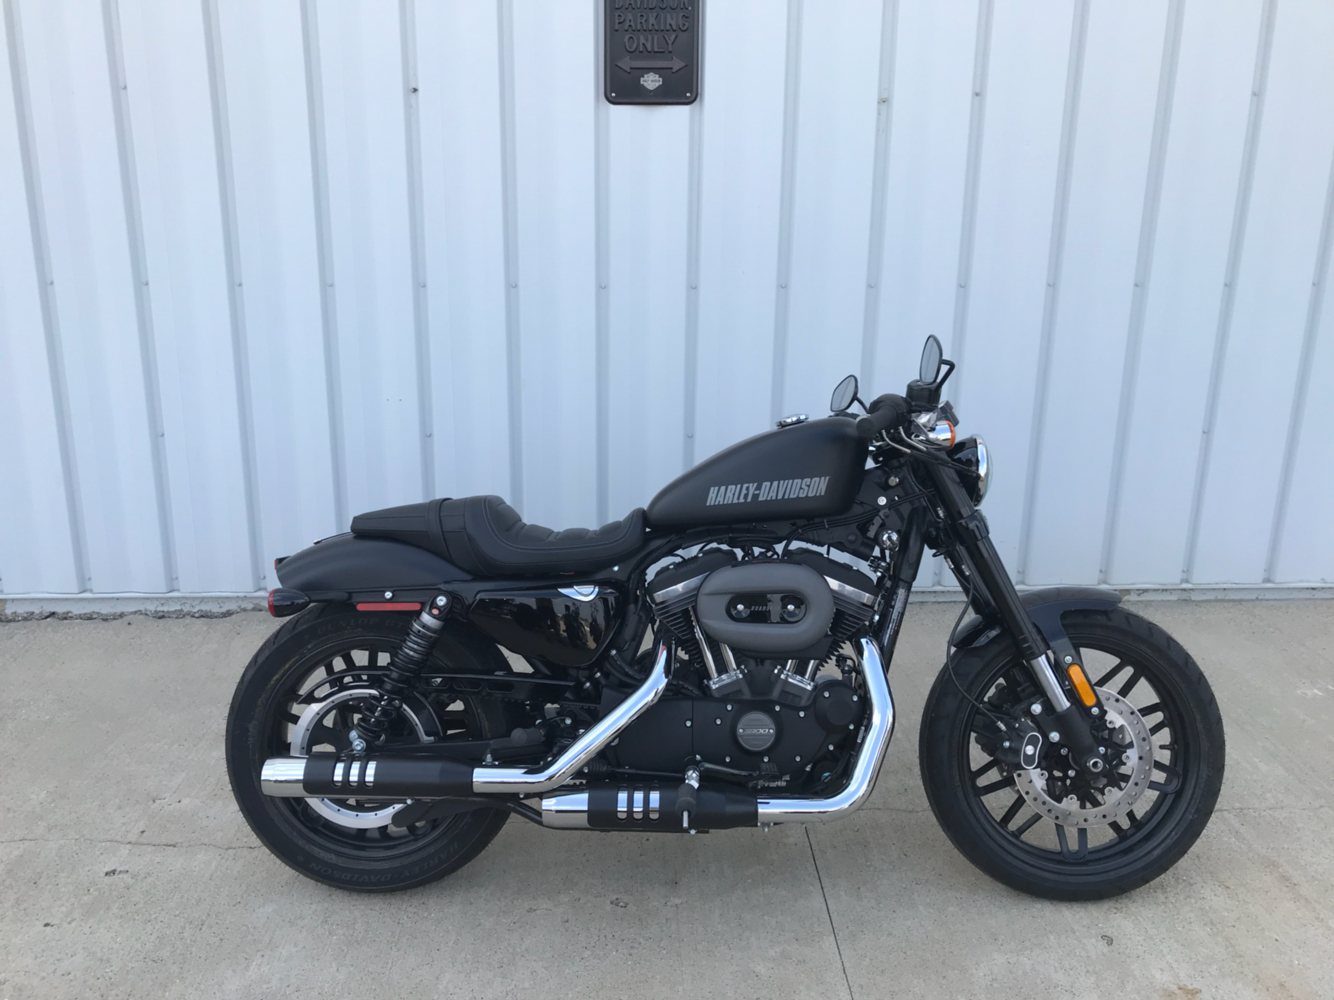 New 2016 Harley Davidson Roadster Black Denim Motorcycles In Osceola Ia 443242